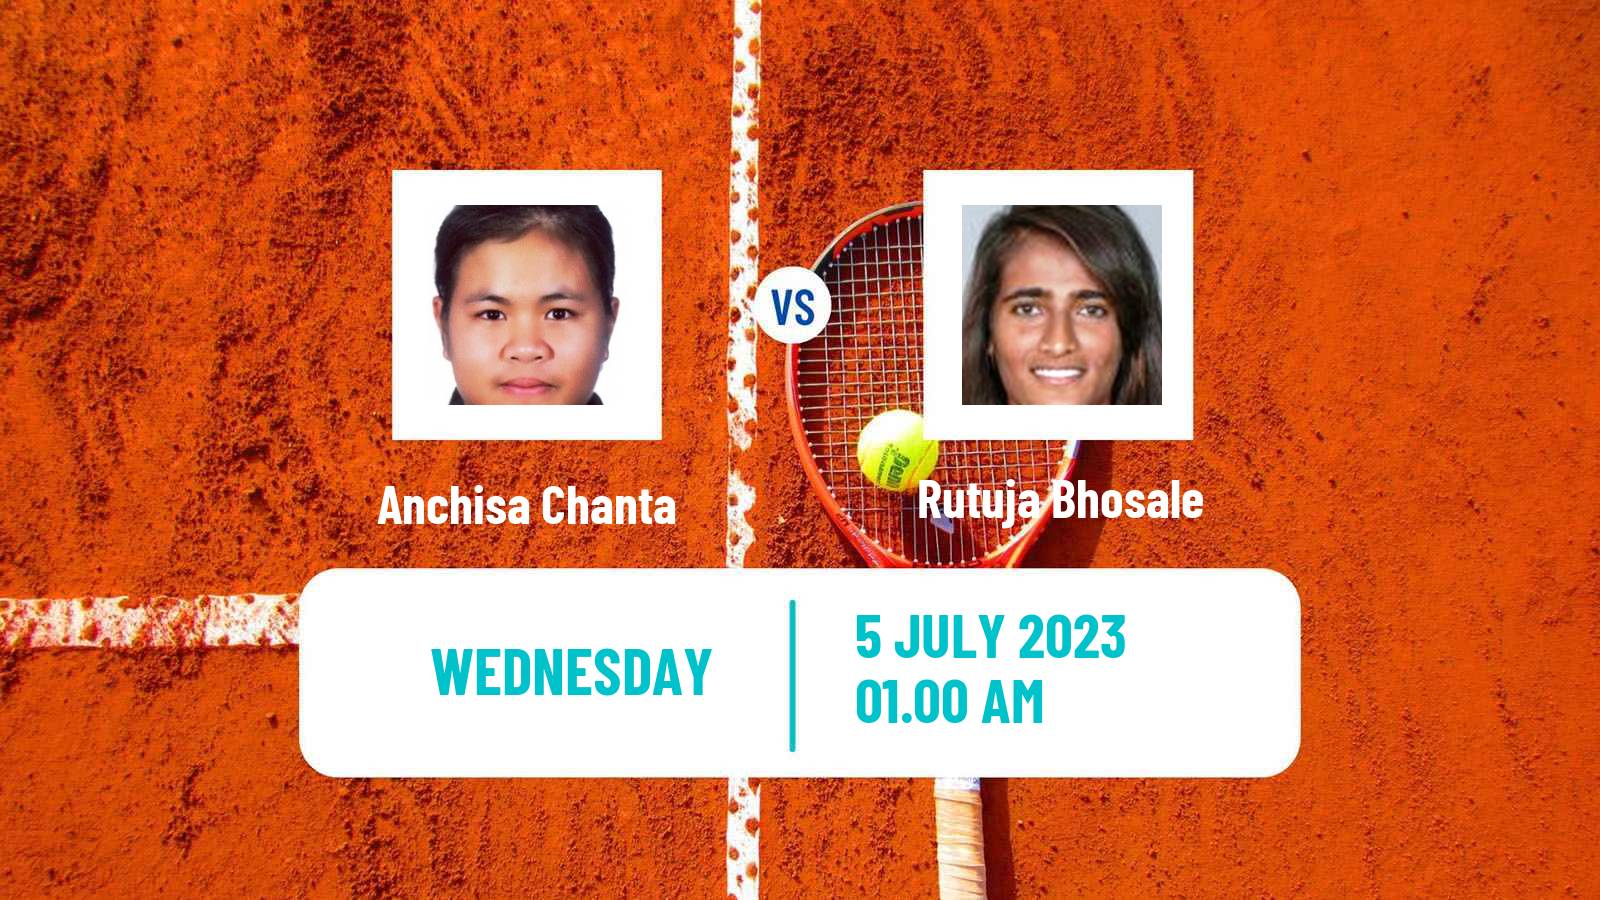 Tennis ITF W25 Nakhon Si Thammarat 2 Women Anchisa Chanta - Rutuja Bhosale